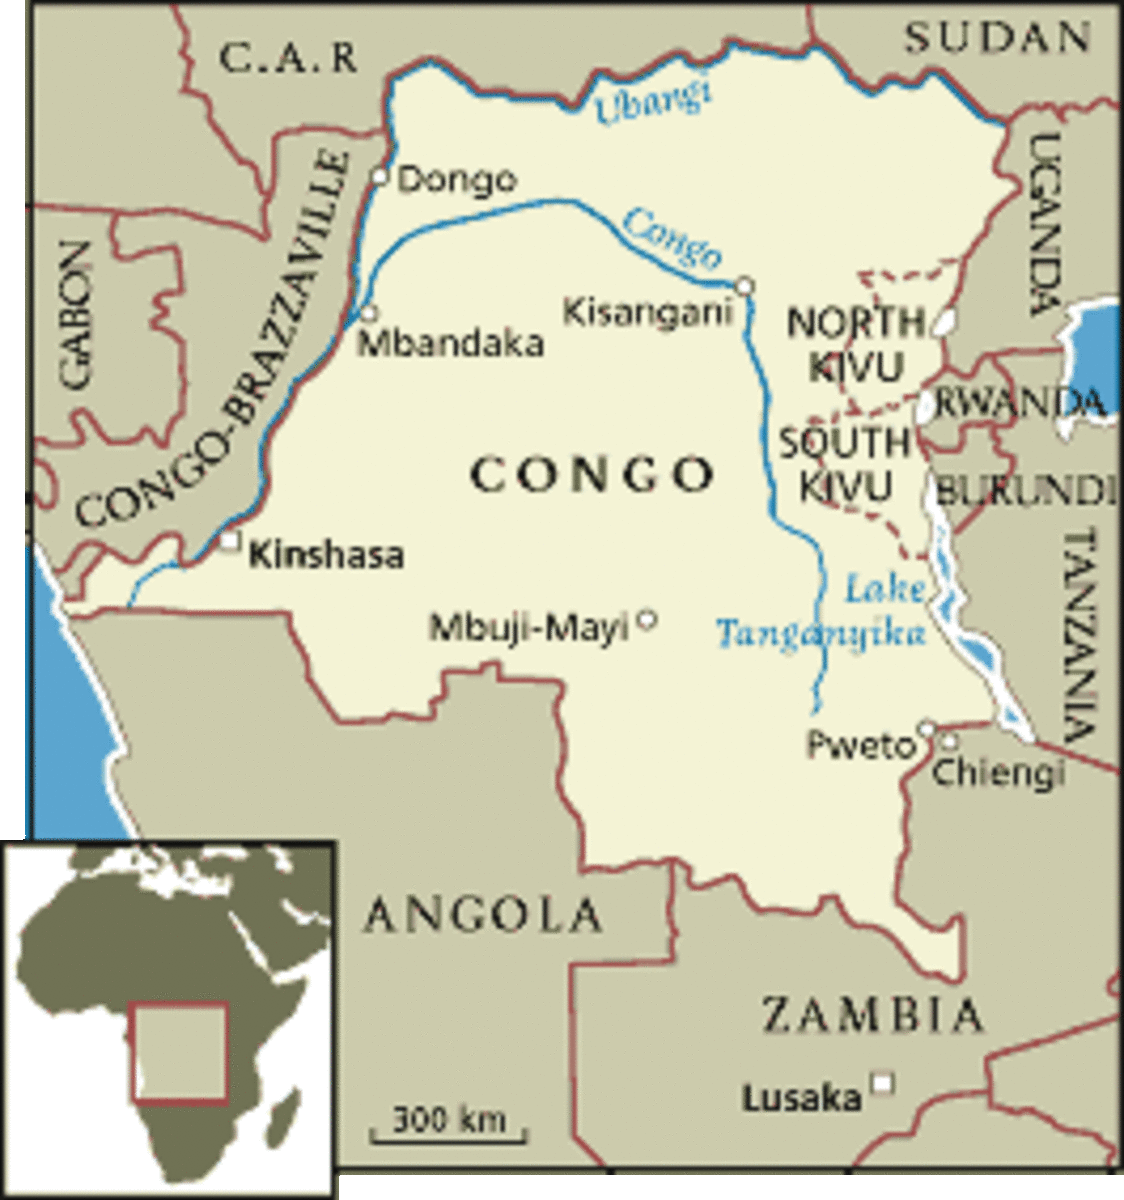 Congo's map